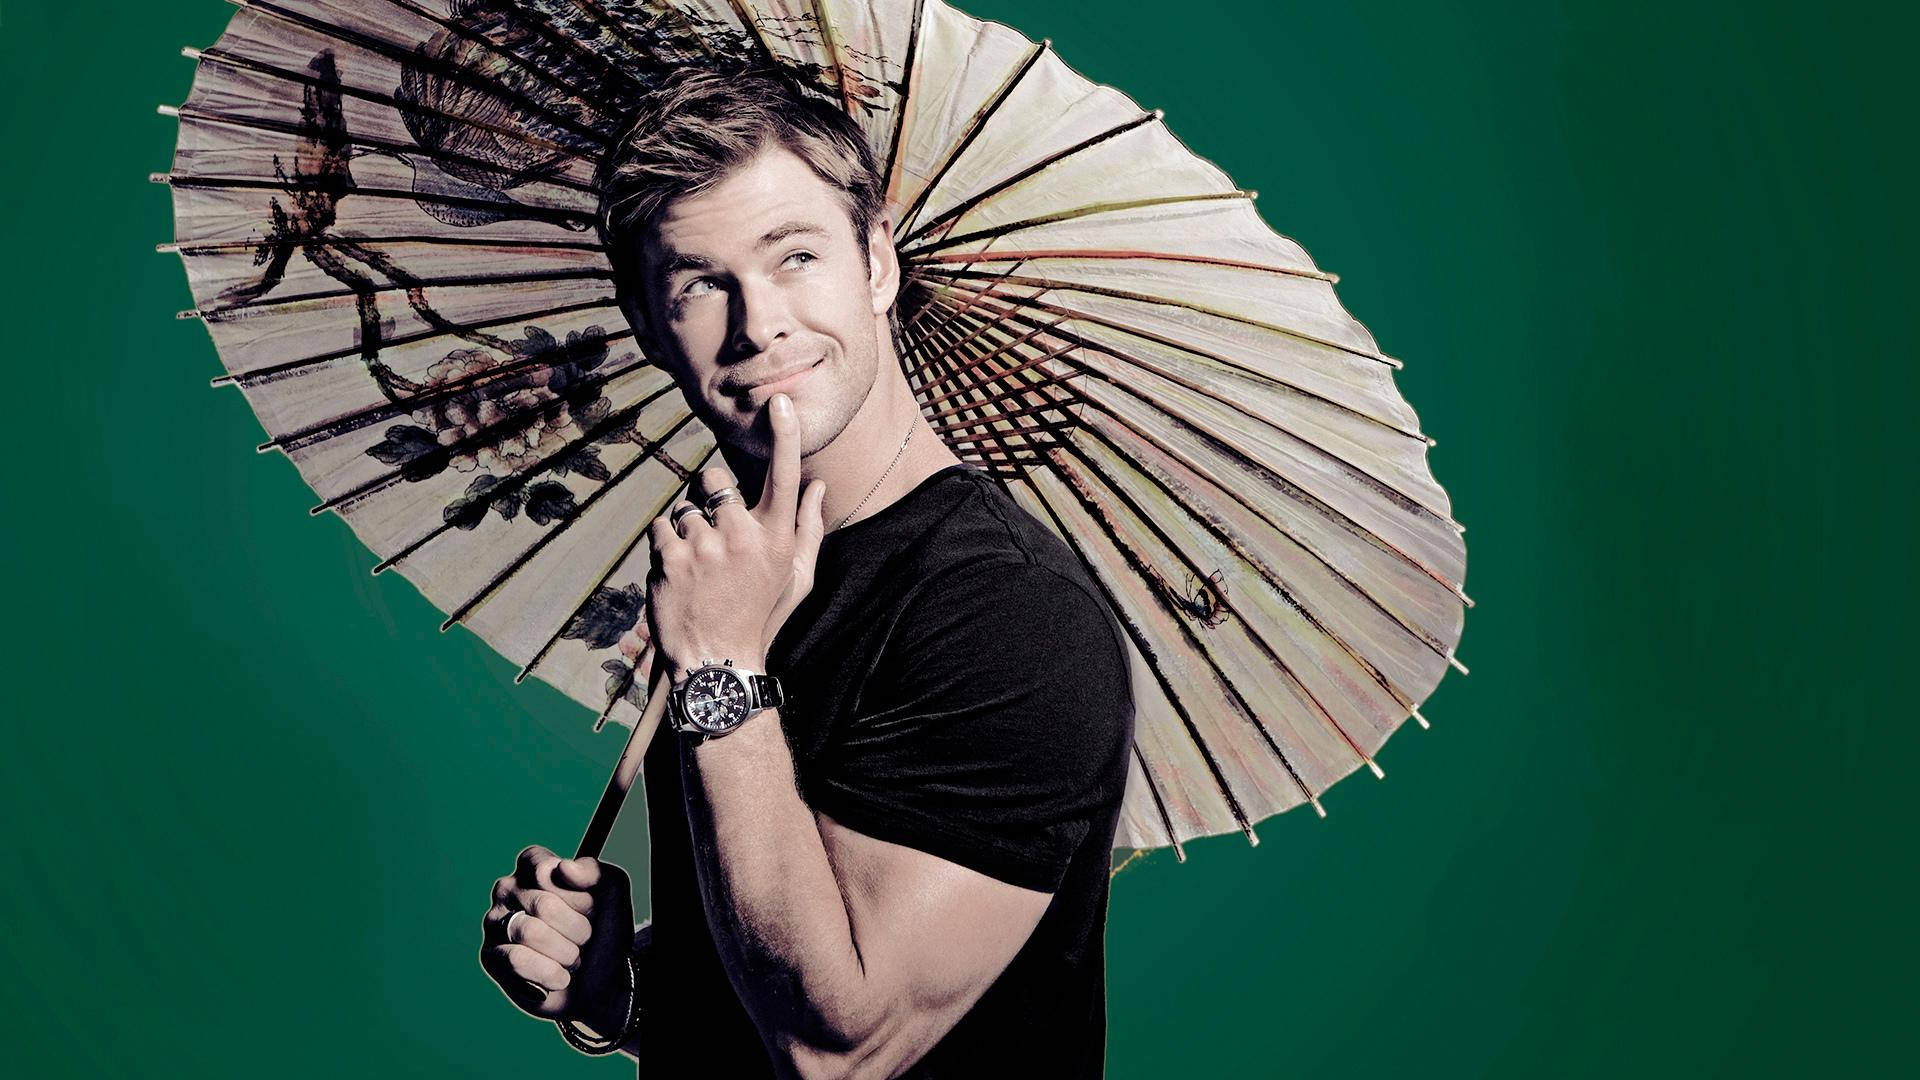 Chris Hemsworth With An Umbrella Background